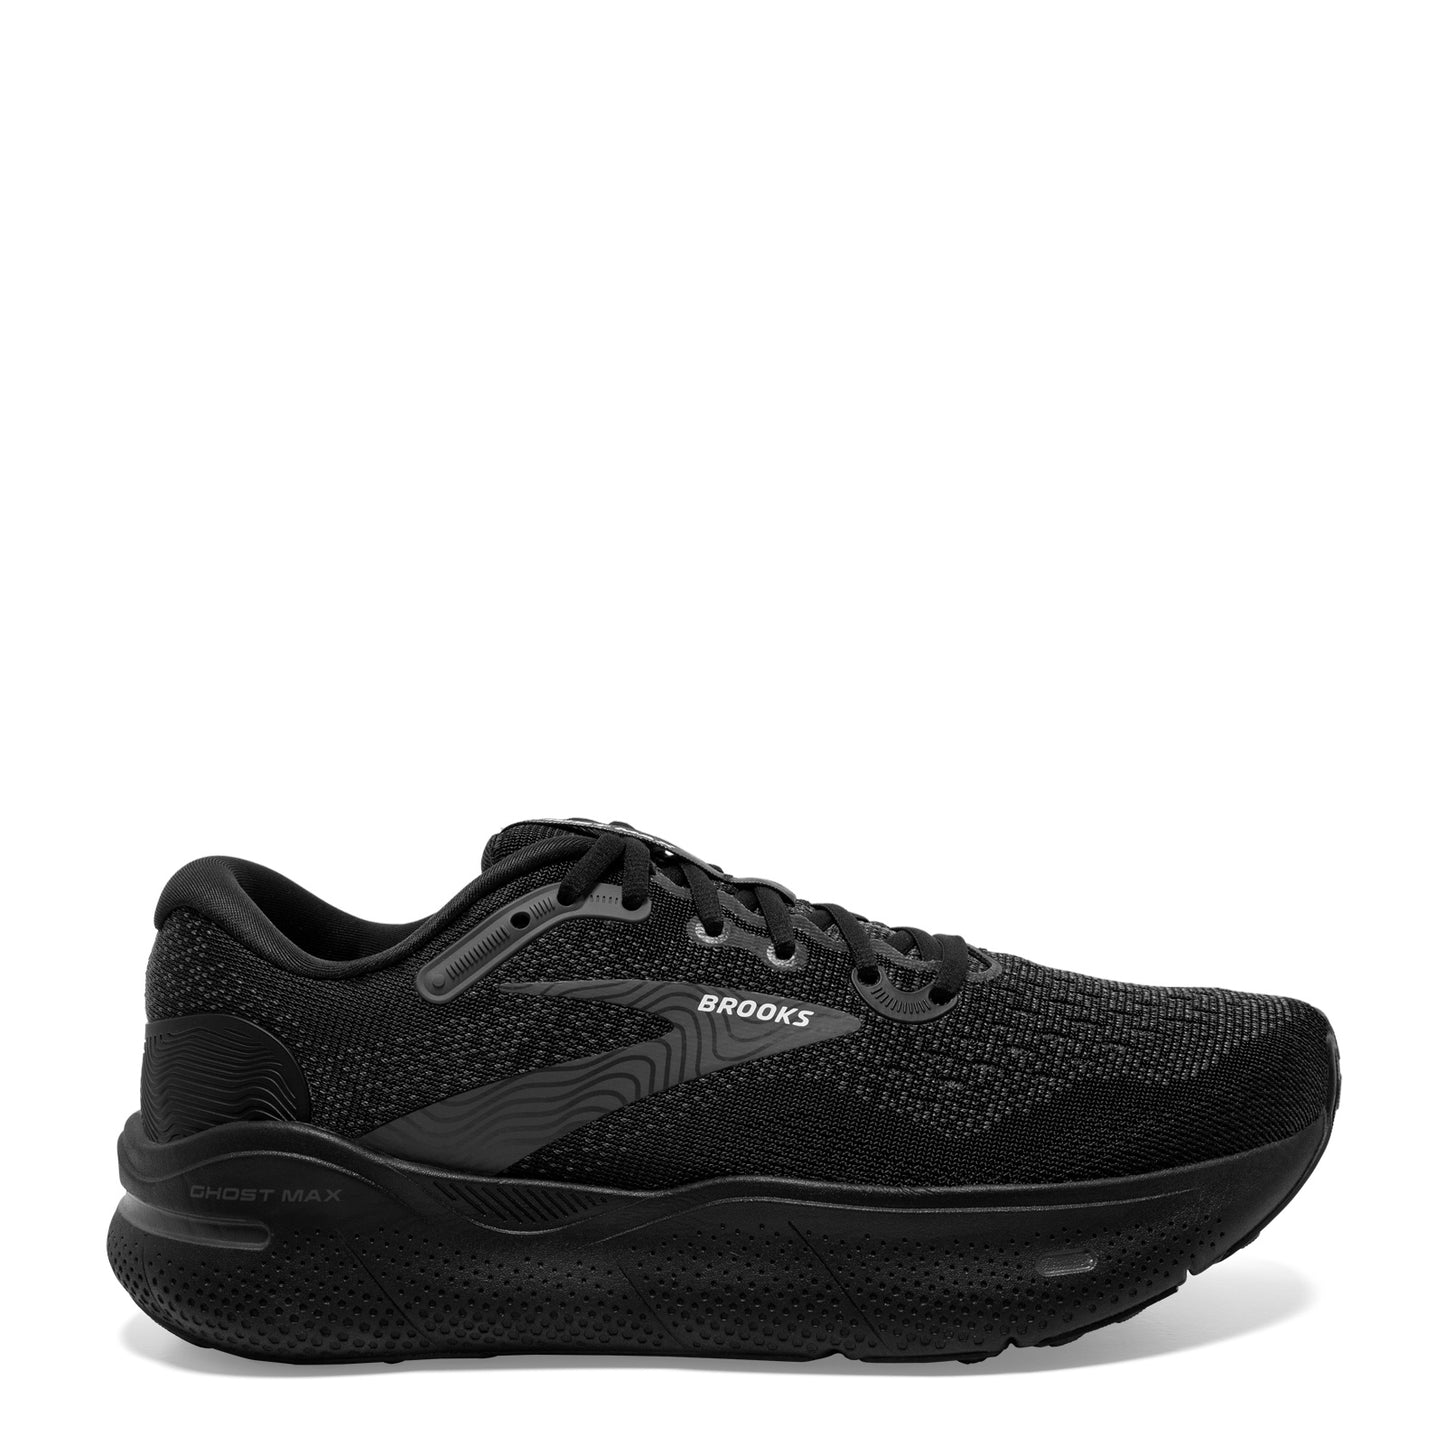 Peltz Shoes  Women's Brooks Ghost Max Running Shoe Black/Black/Ebony 120395 1B 020